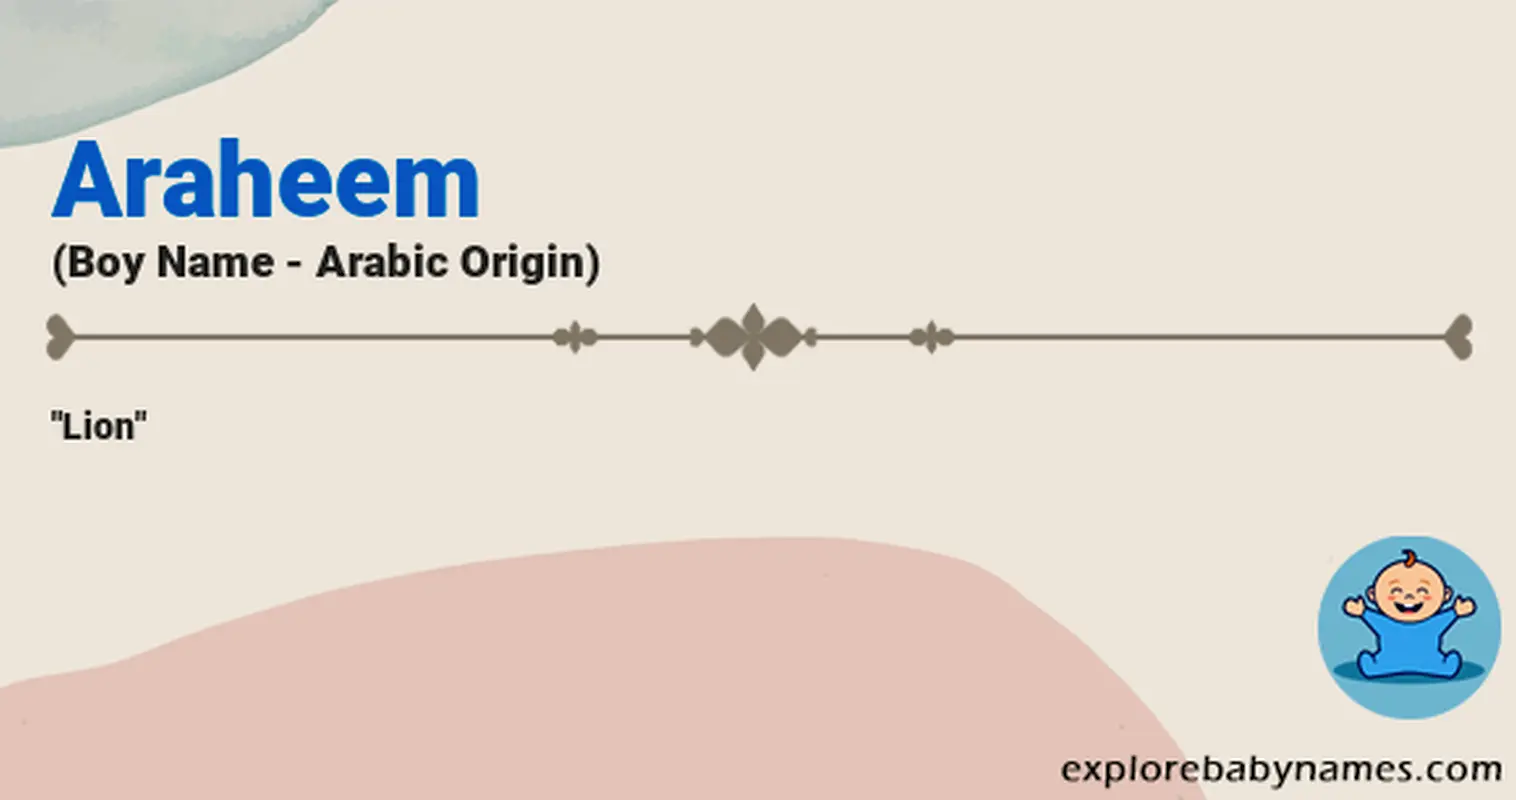 Meaning of Araheem